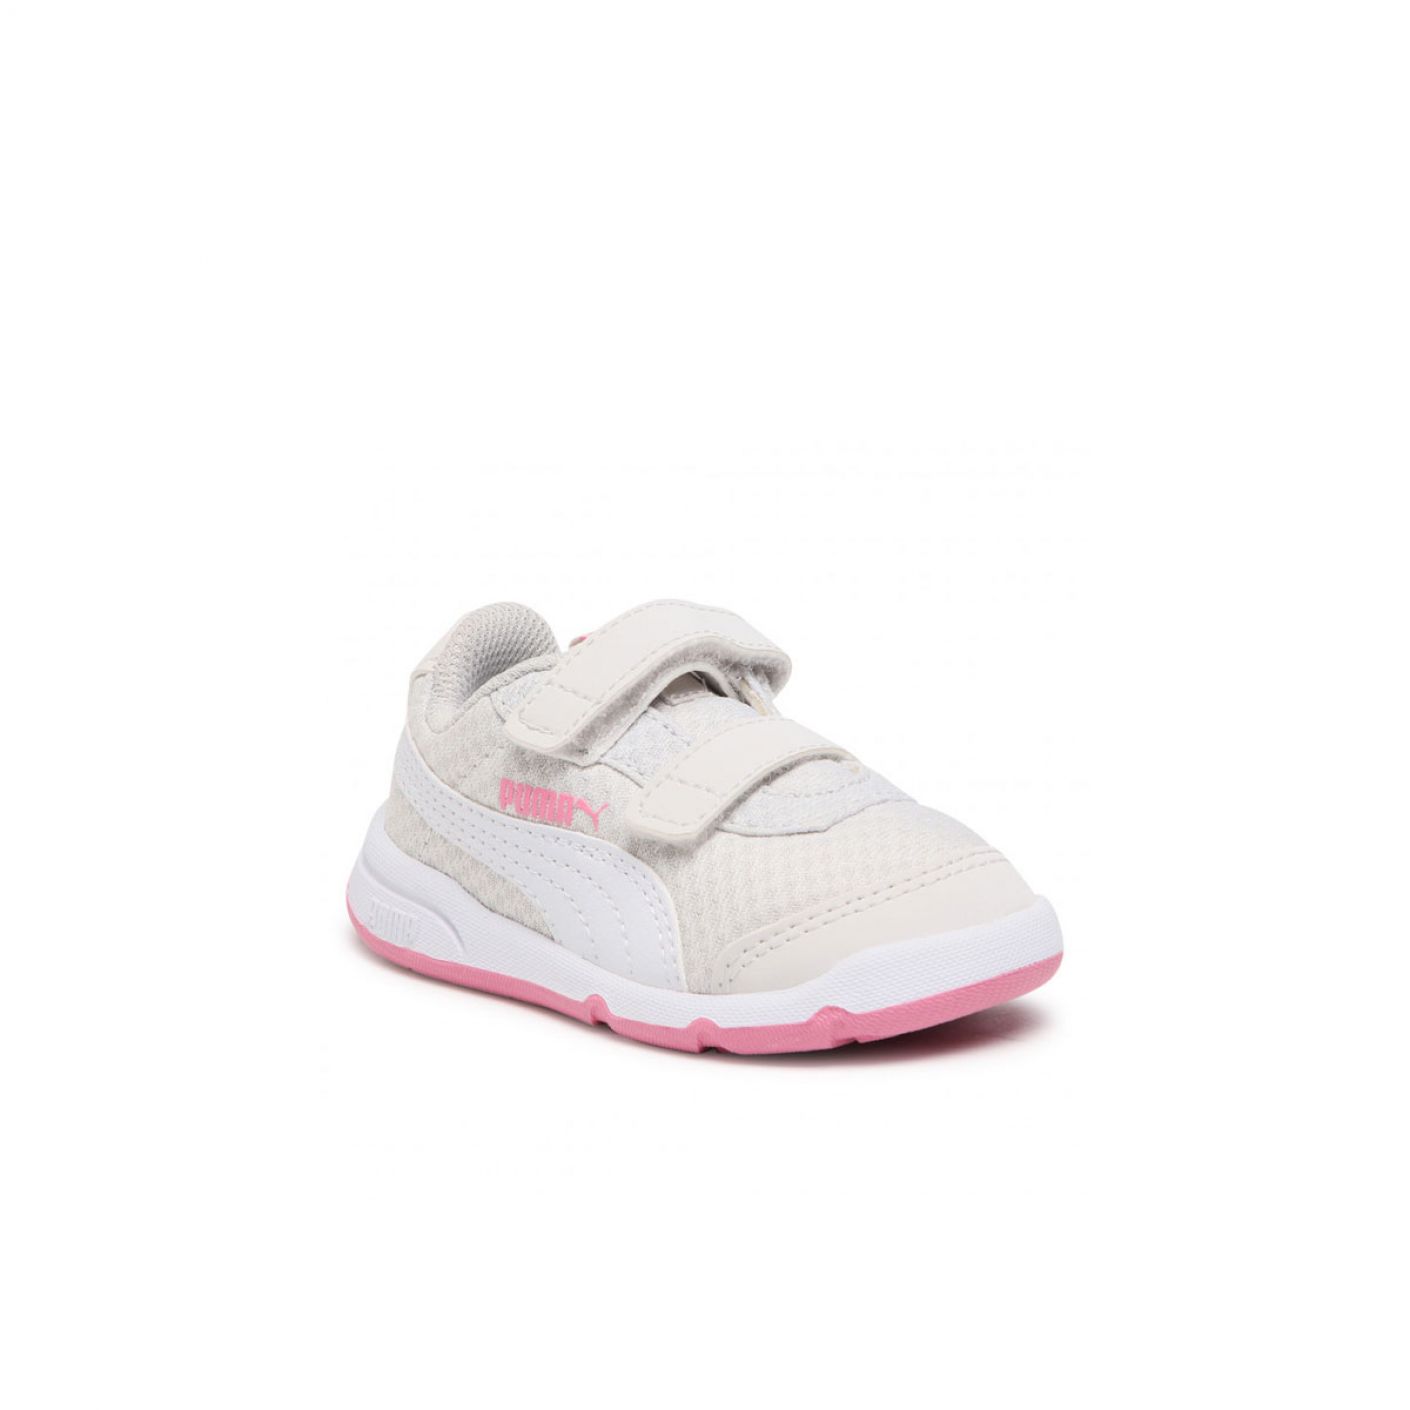 Puma Stepfleex 2 Mesh VE V Infant Gray Pink